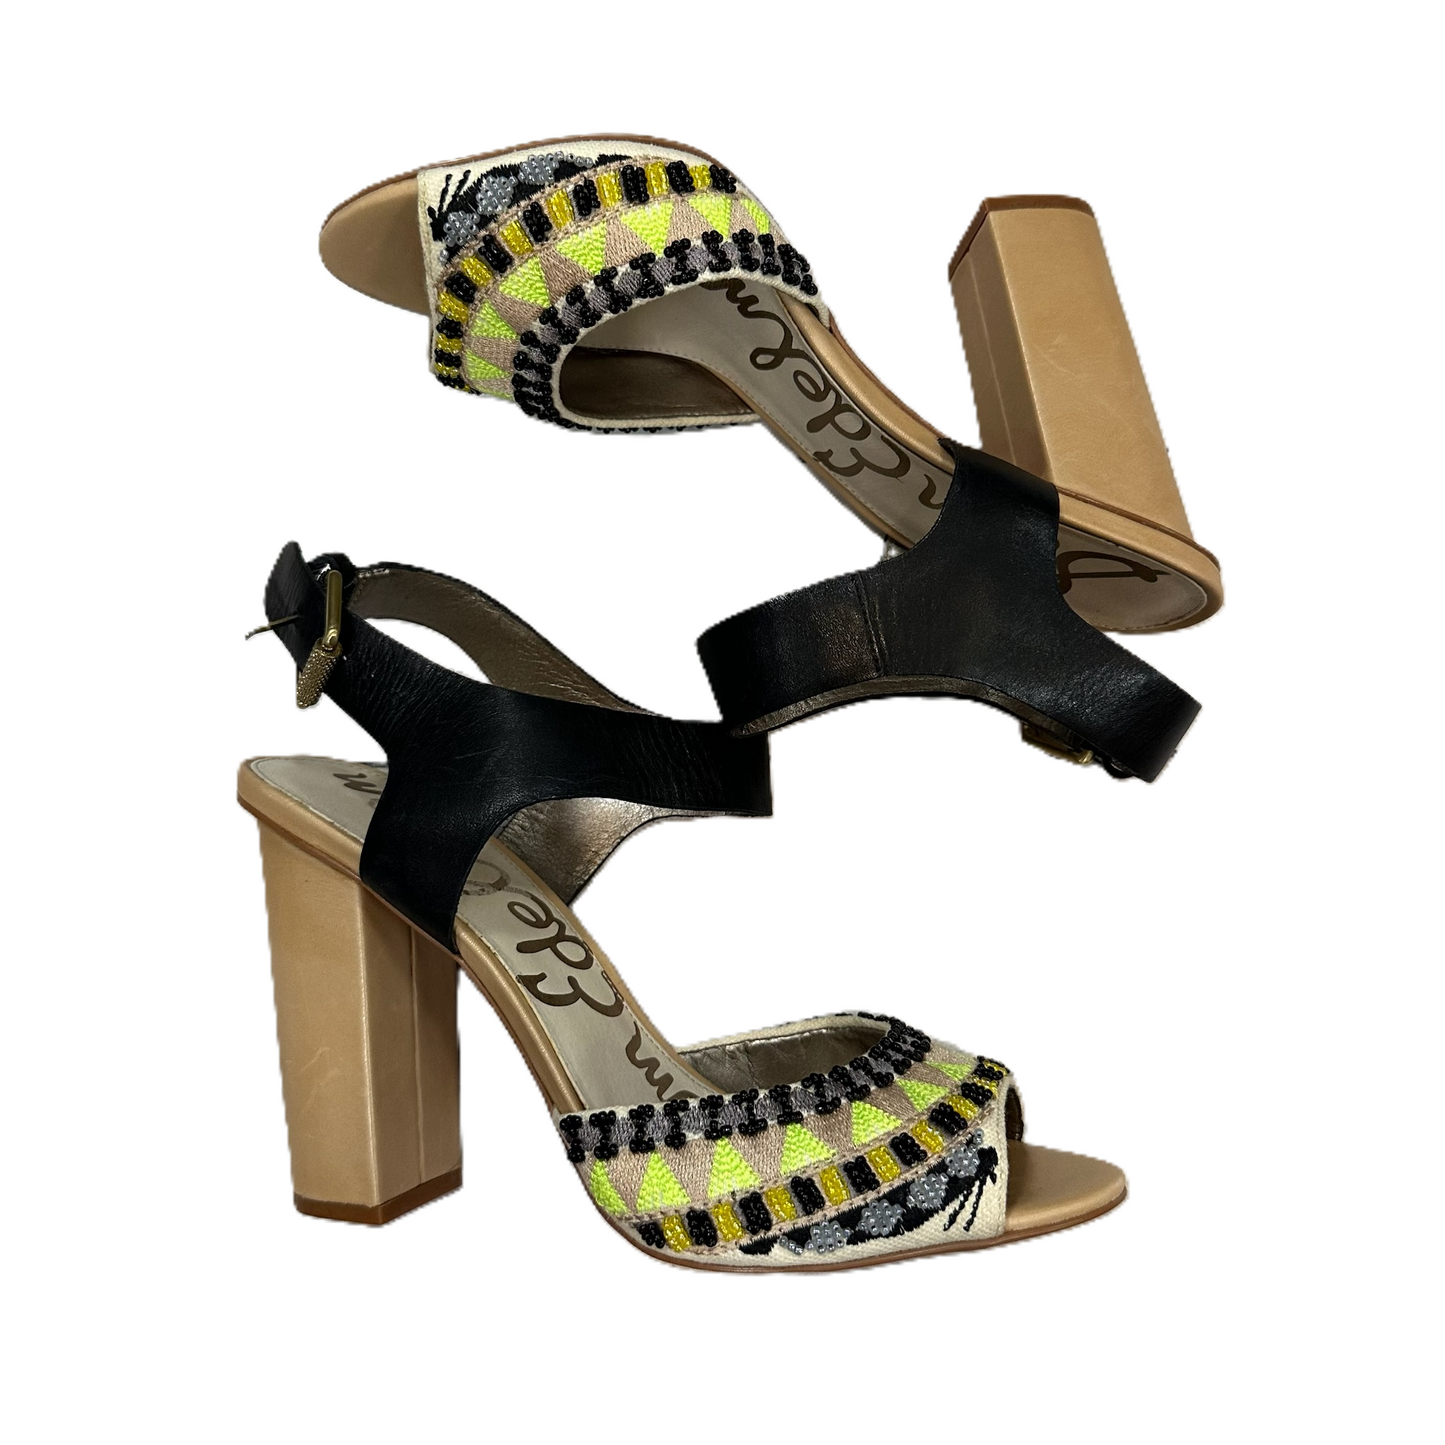 Black & Tan Sandals Heels Block By Sam Edelman, Size: 9.5